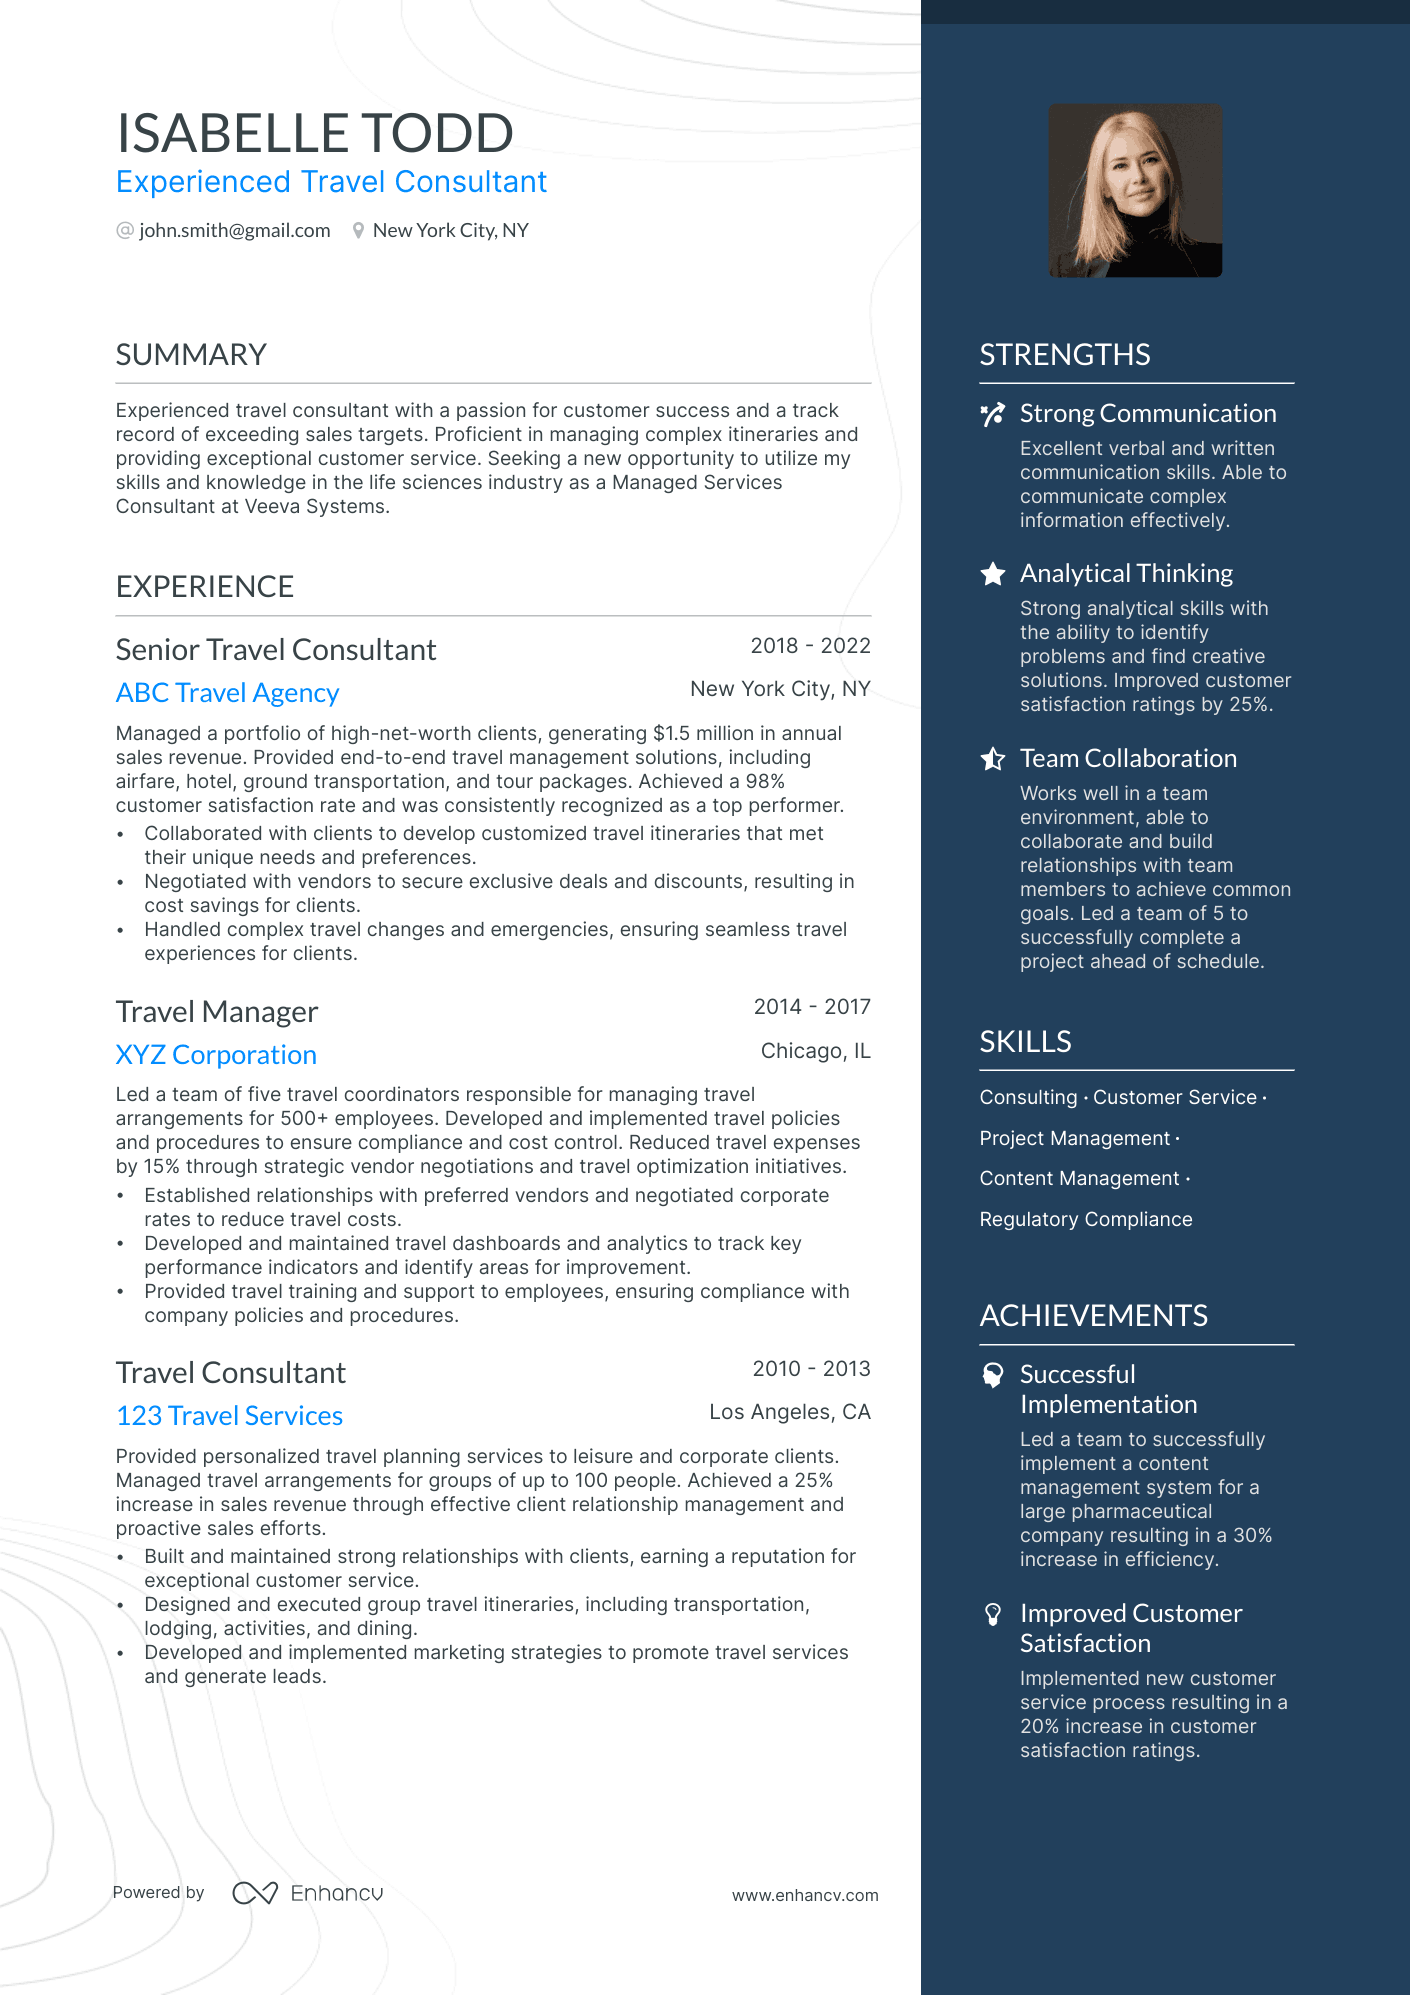 Travel Consultant resume example